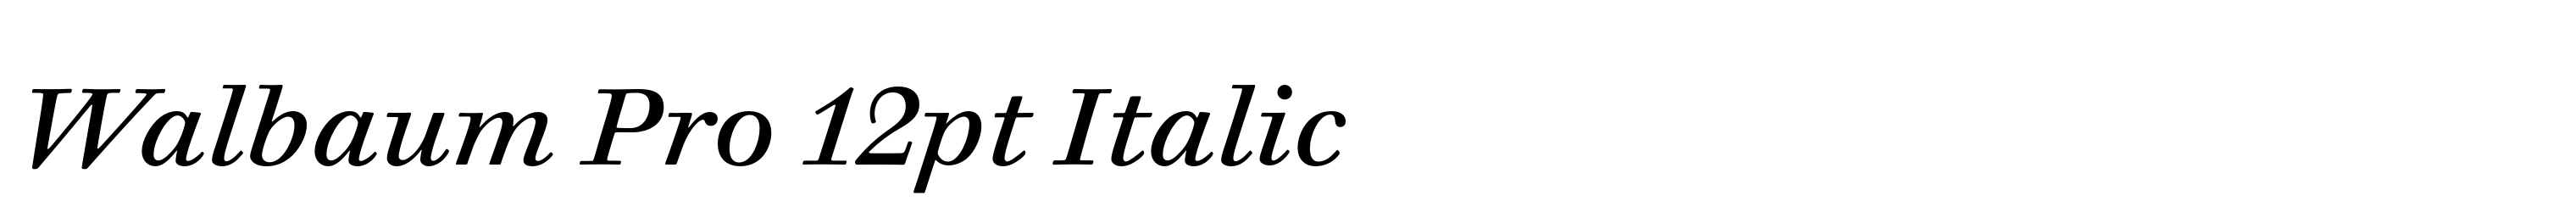 Walbaum Pro 12pt Italic